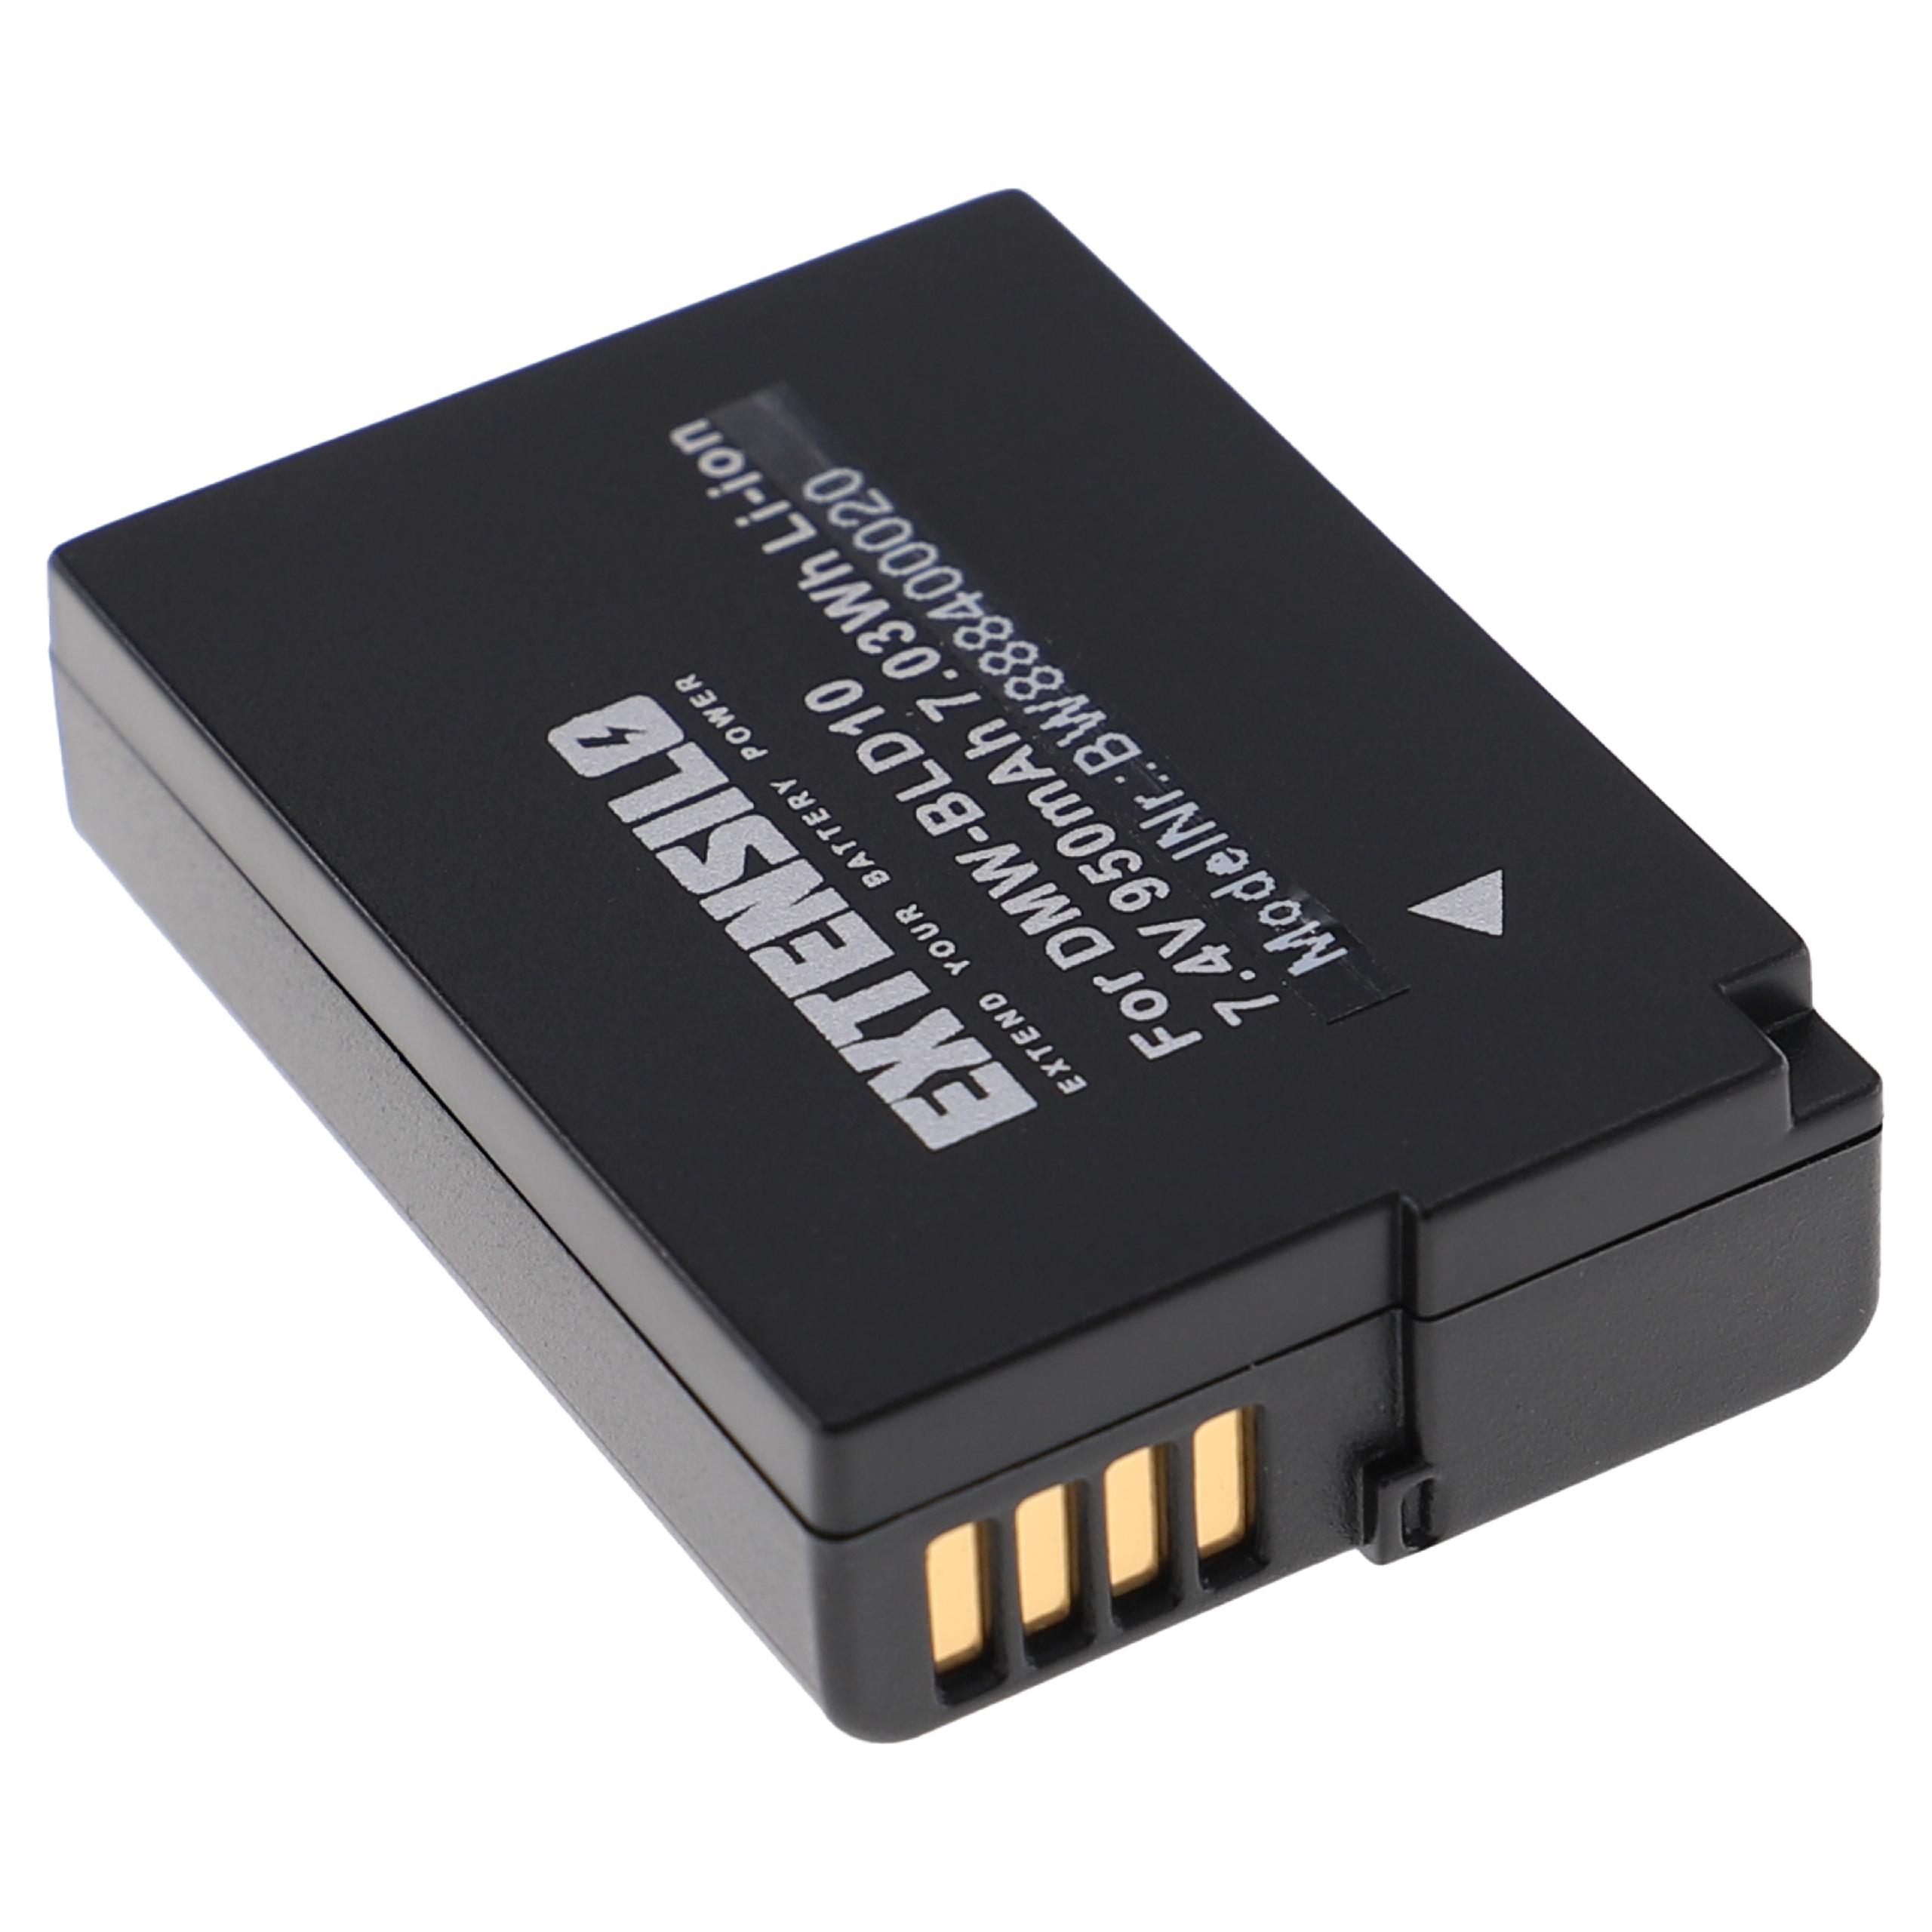 Battery Replacement for Panasonic DMW-BLD10E, DMW-BLD10, DMW-BLD10PP - 950mAh, 7.4V, Li-Ion